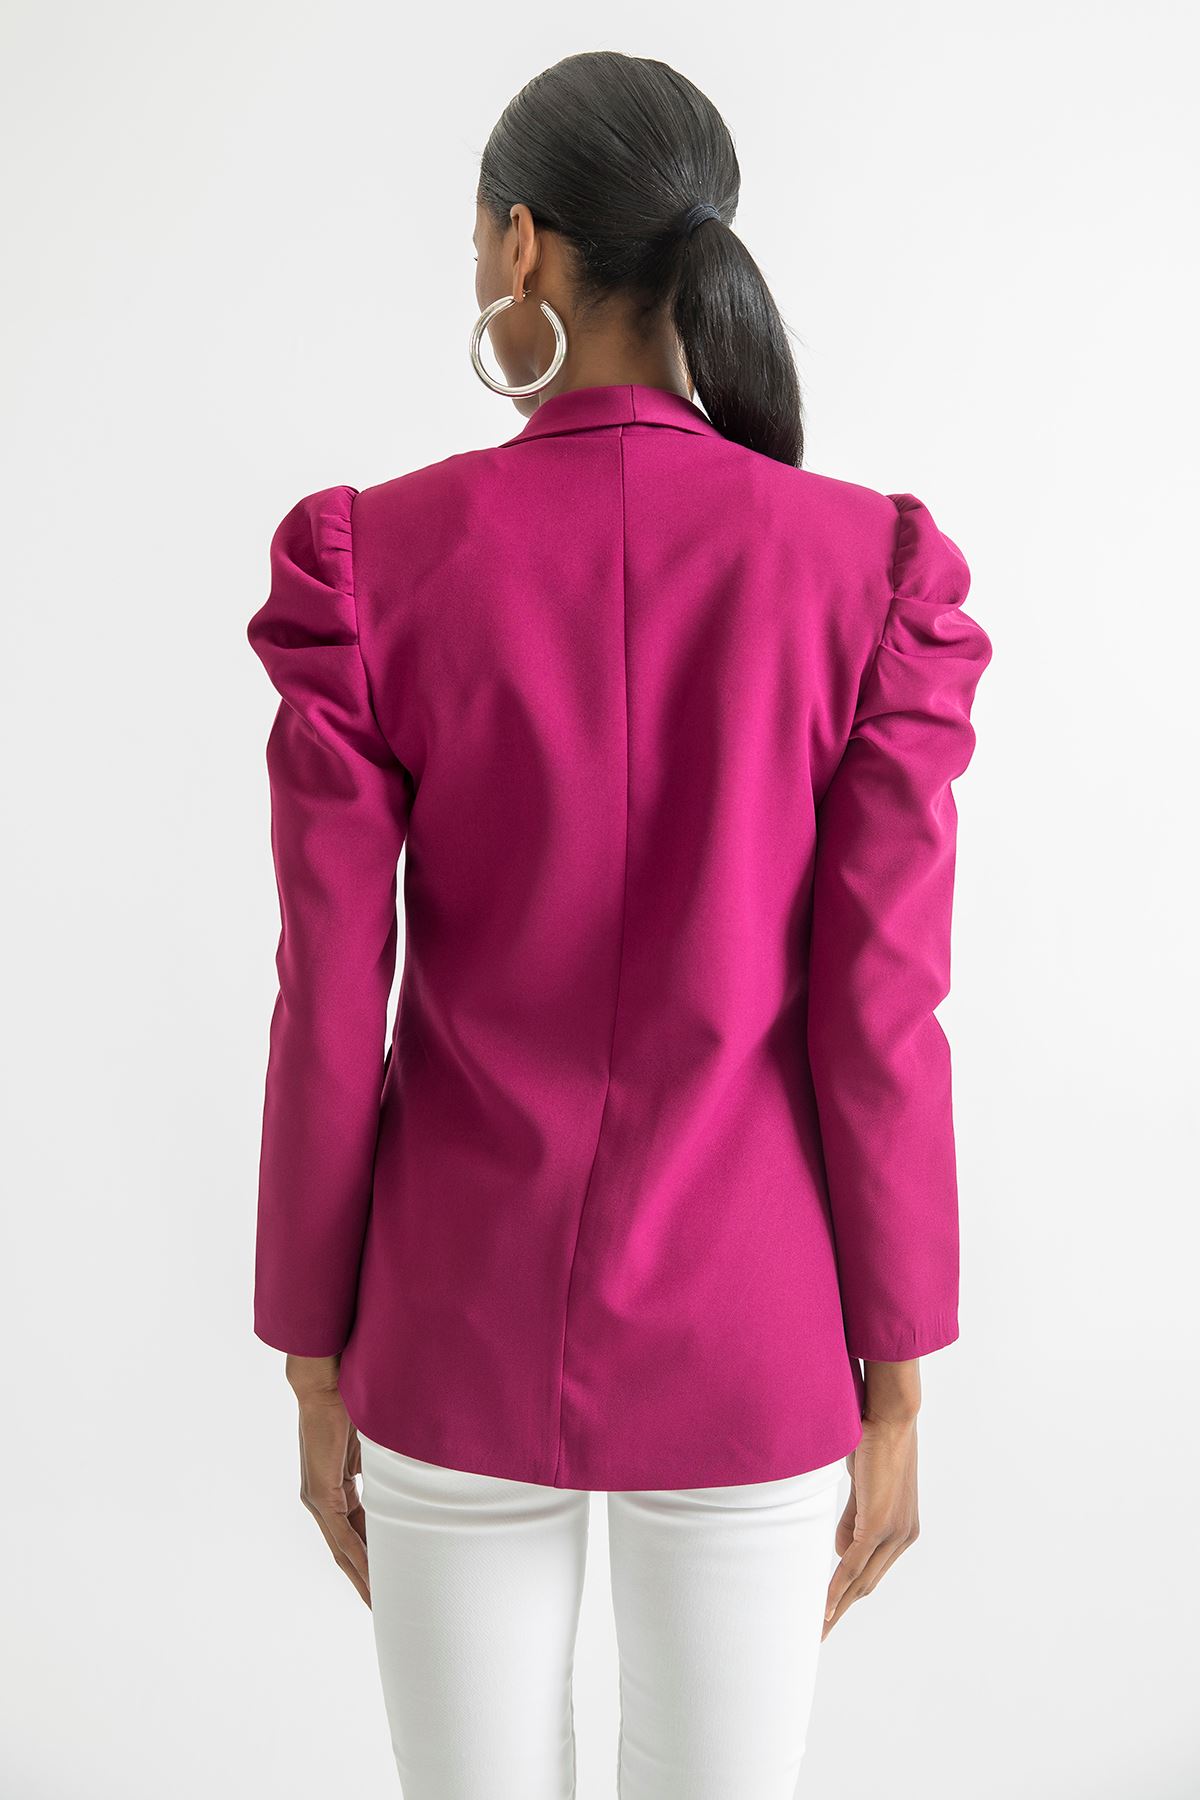 Atlas Fabric Long Sleeve Shawl Collar Below Hip Classical Ruffled Women Jacket - Plum